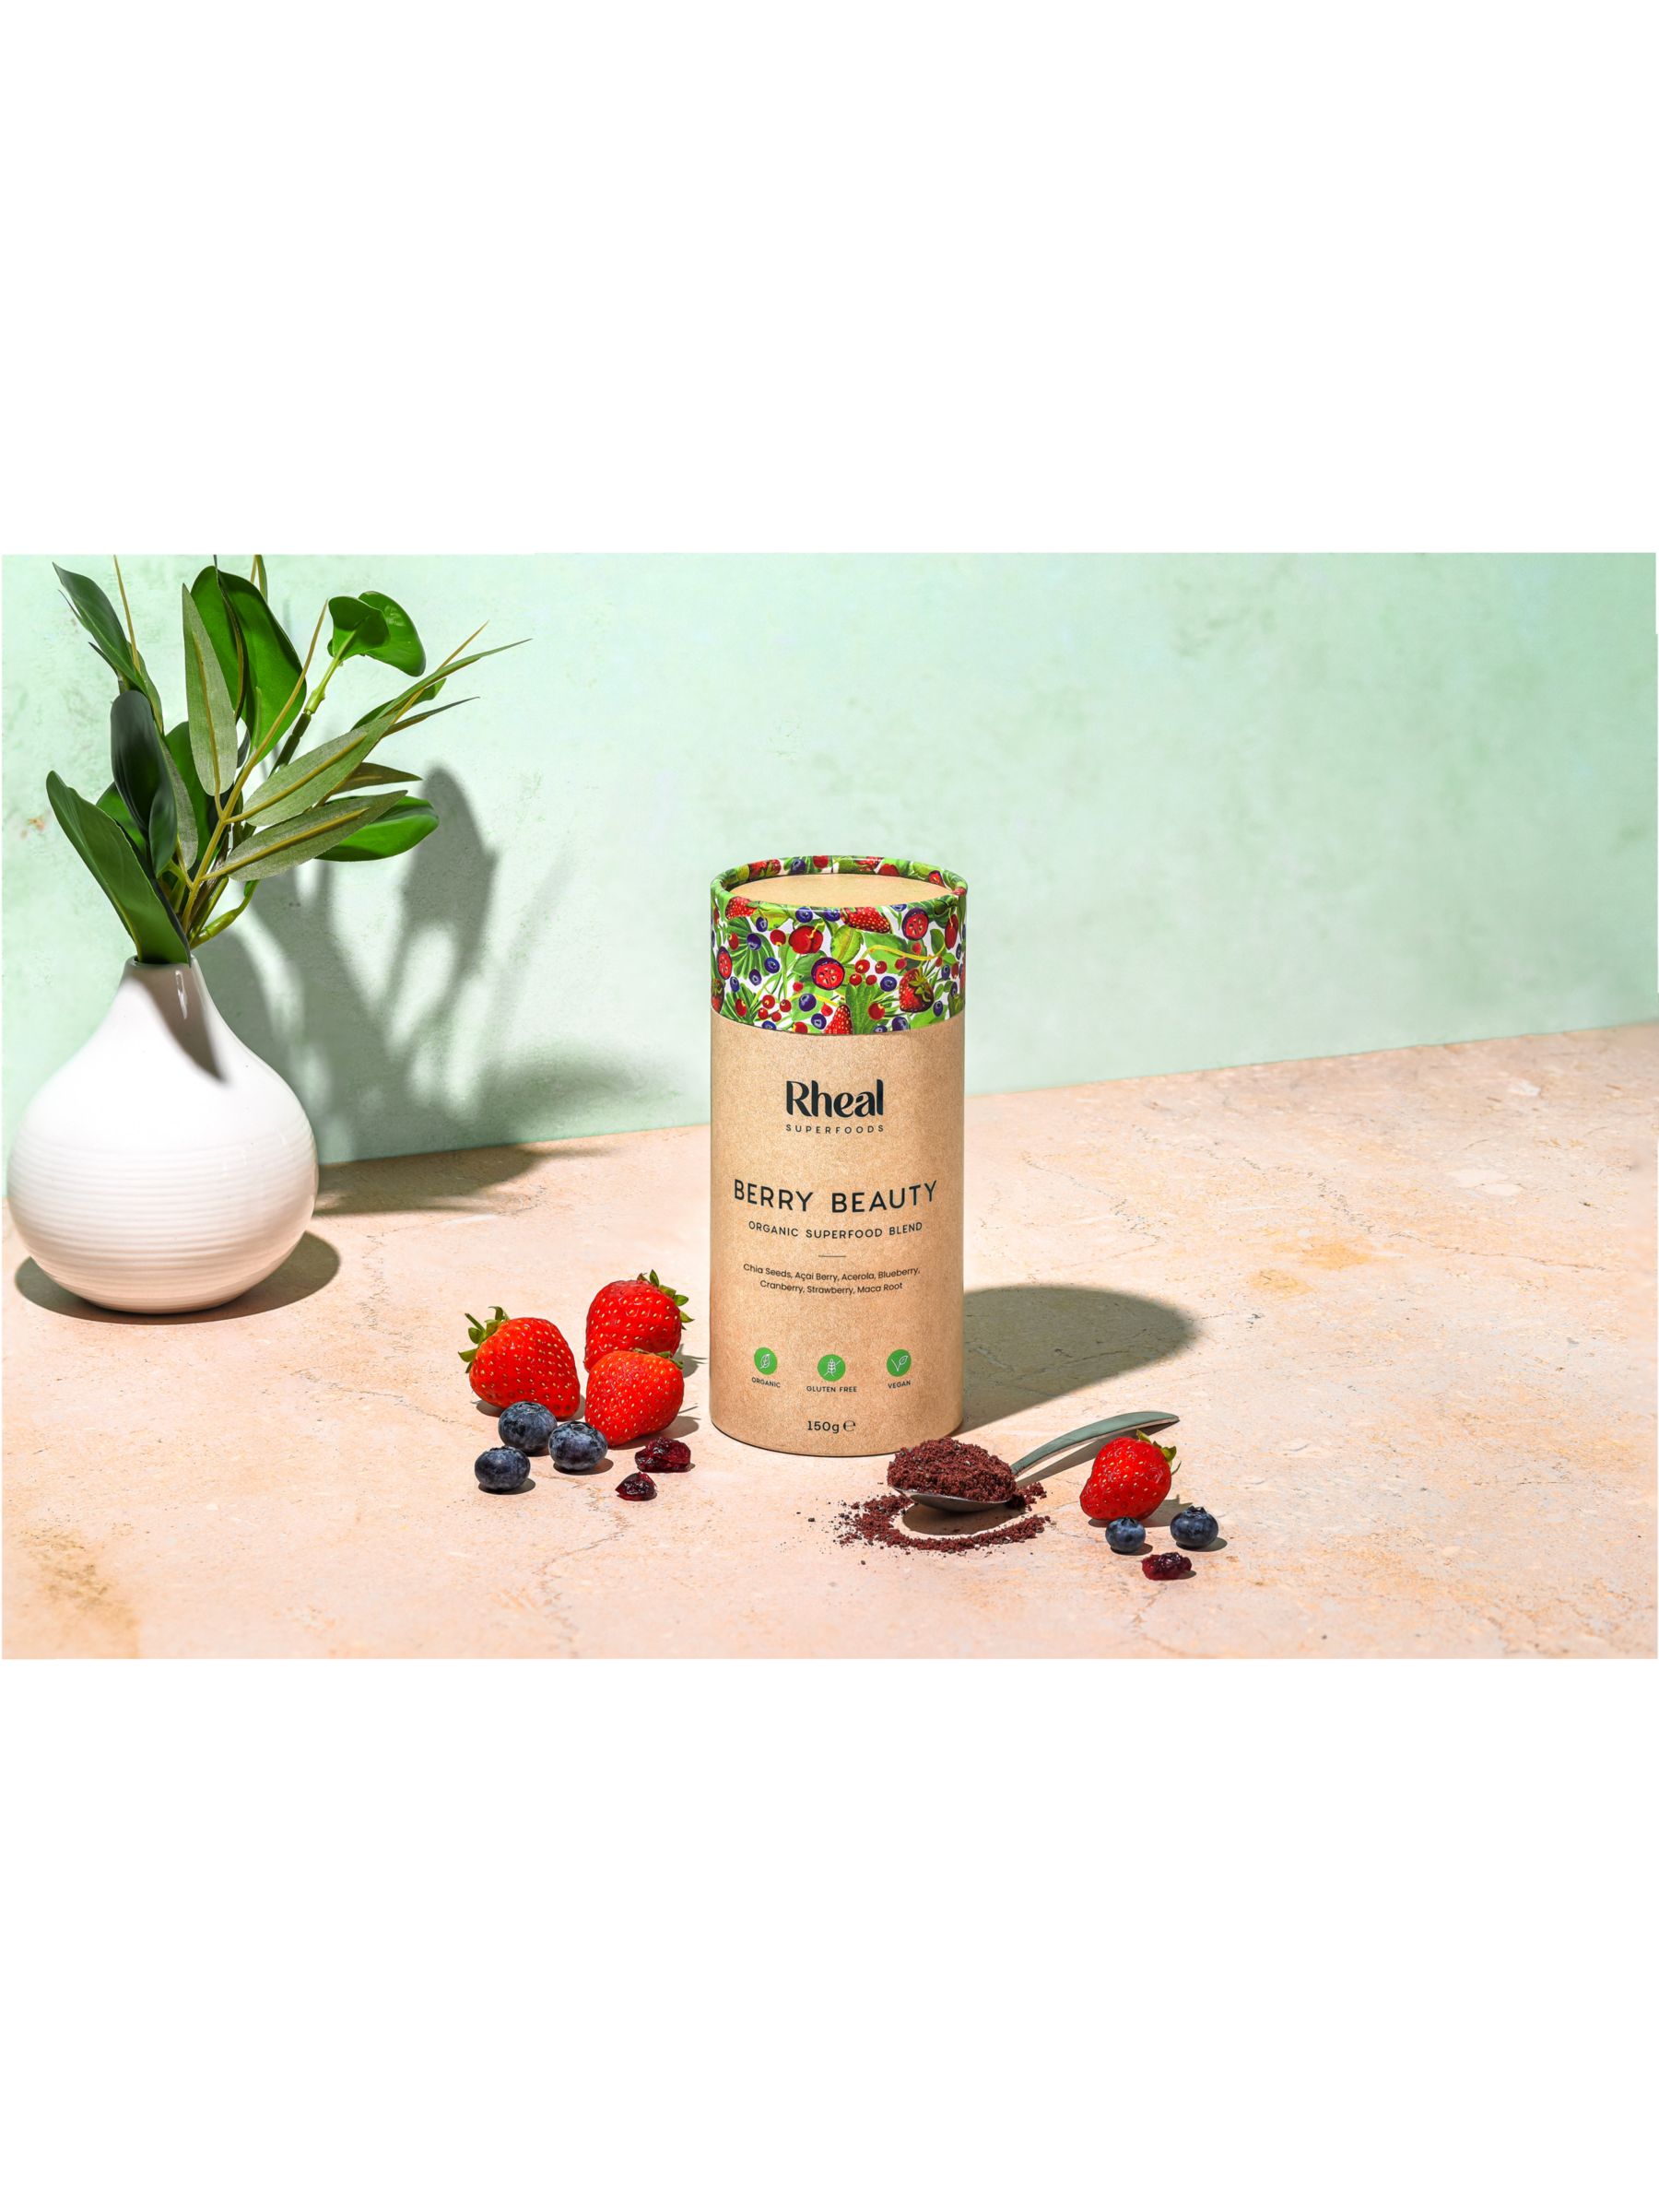 RHEAL Berry Beauty Organic Superfood Blend, 150g